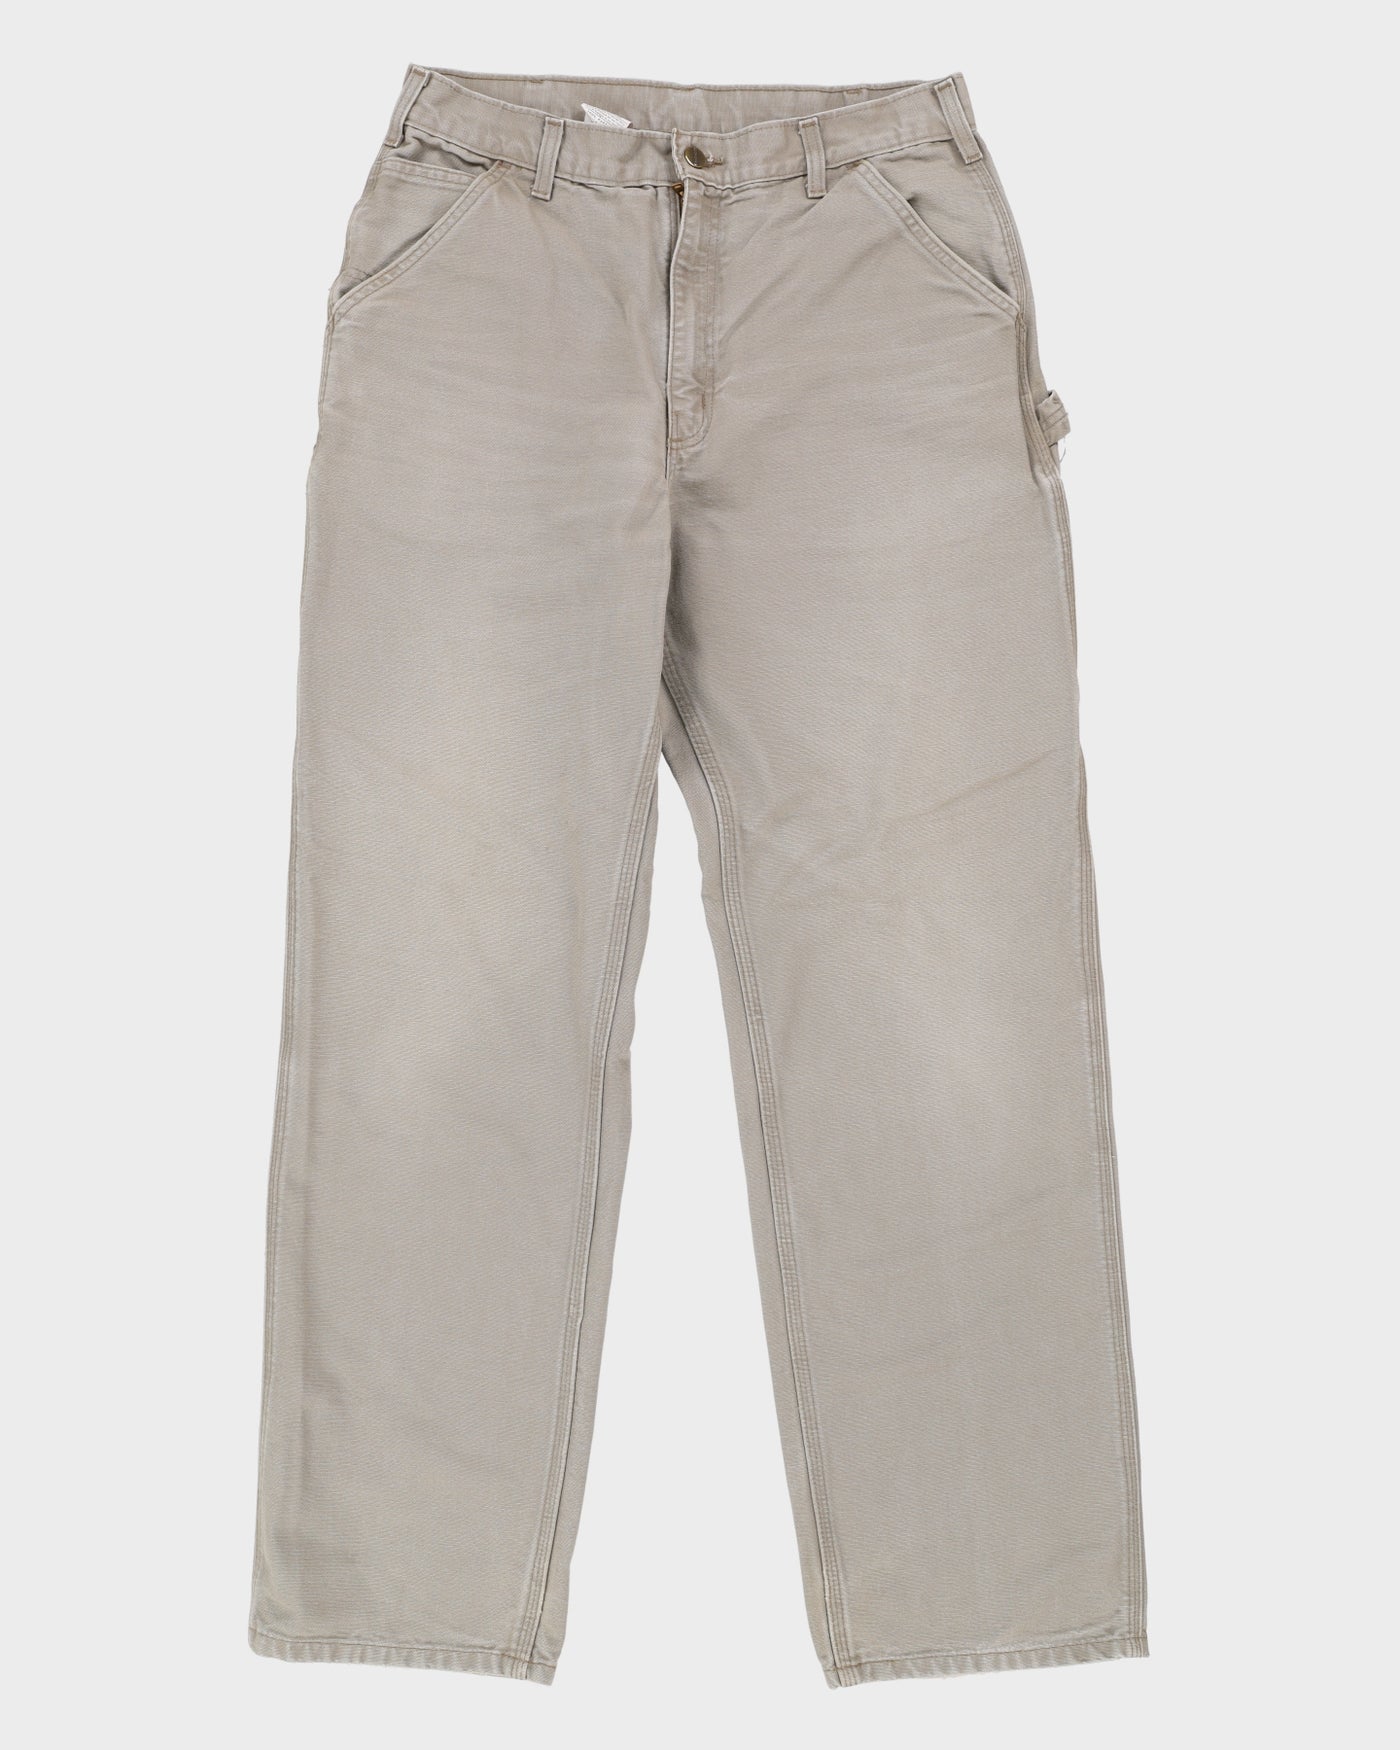 Carhartt Ash Grey Workwear Jeans - W34 L34